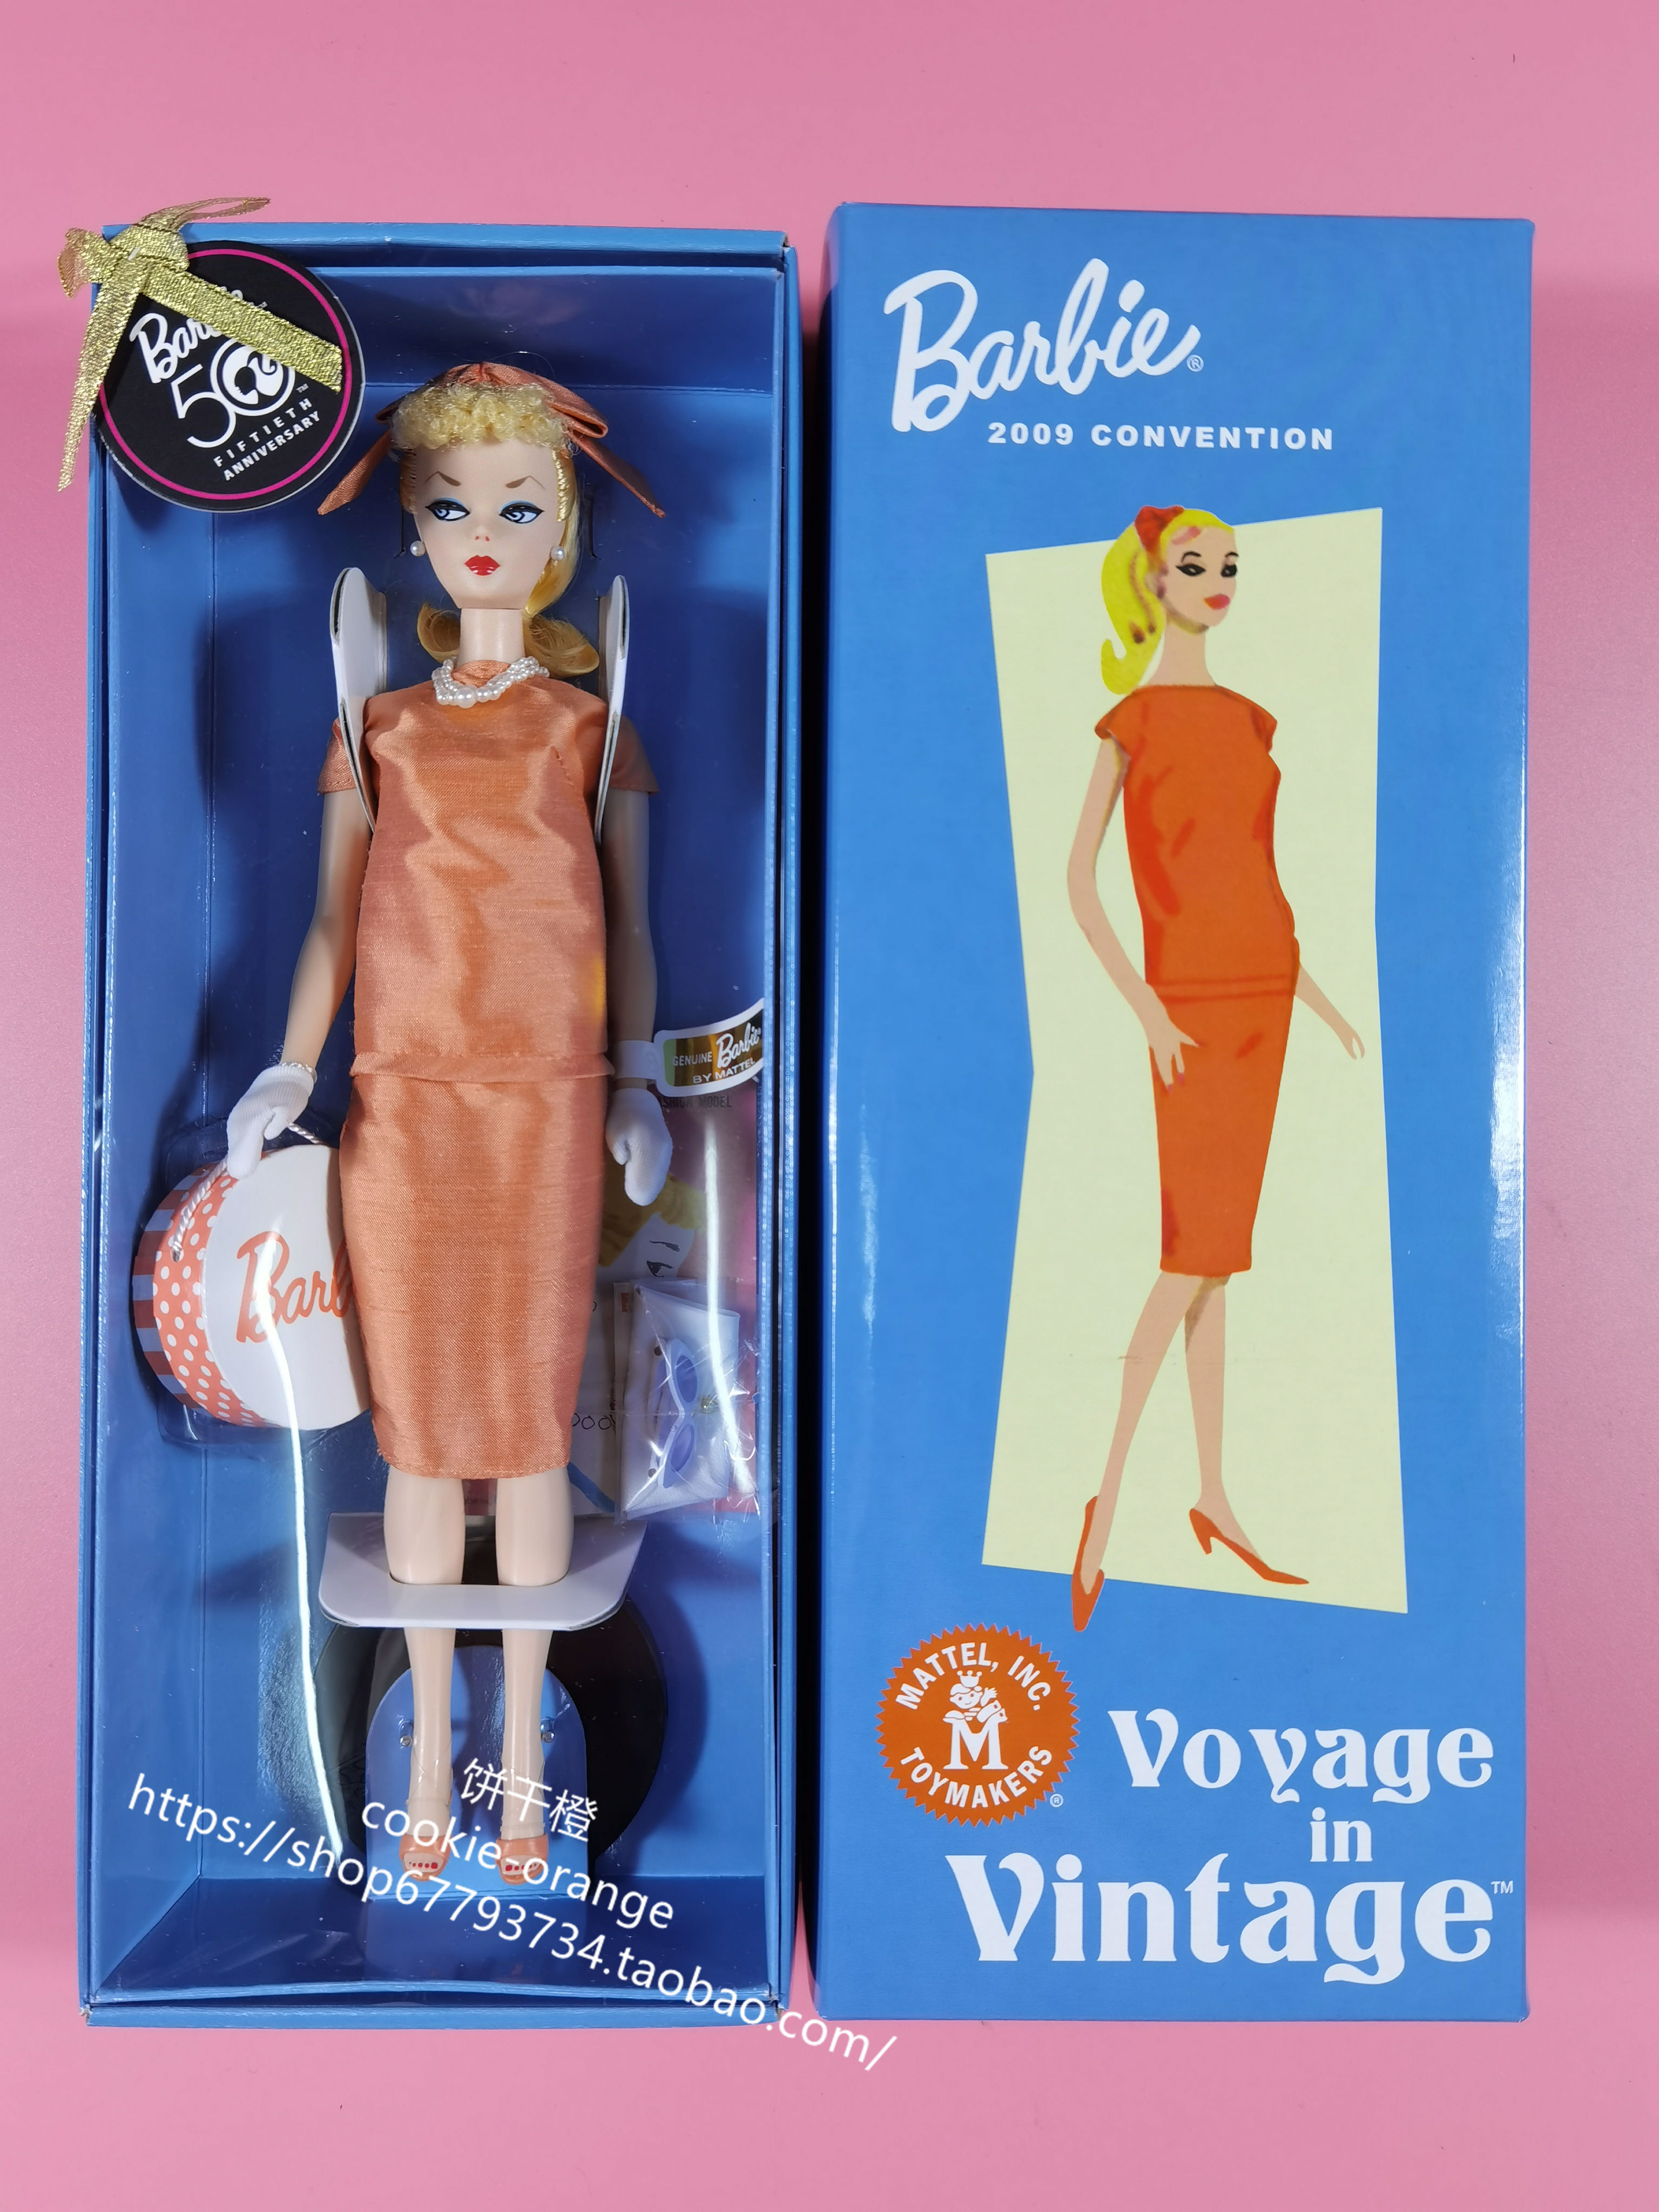 发 Barbie Convention Voyage in Vintage 2009 大会版复刻芭比